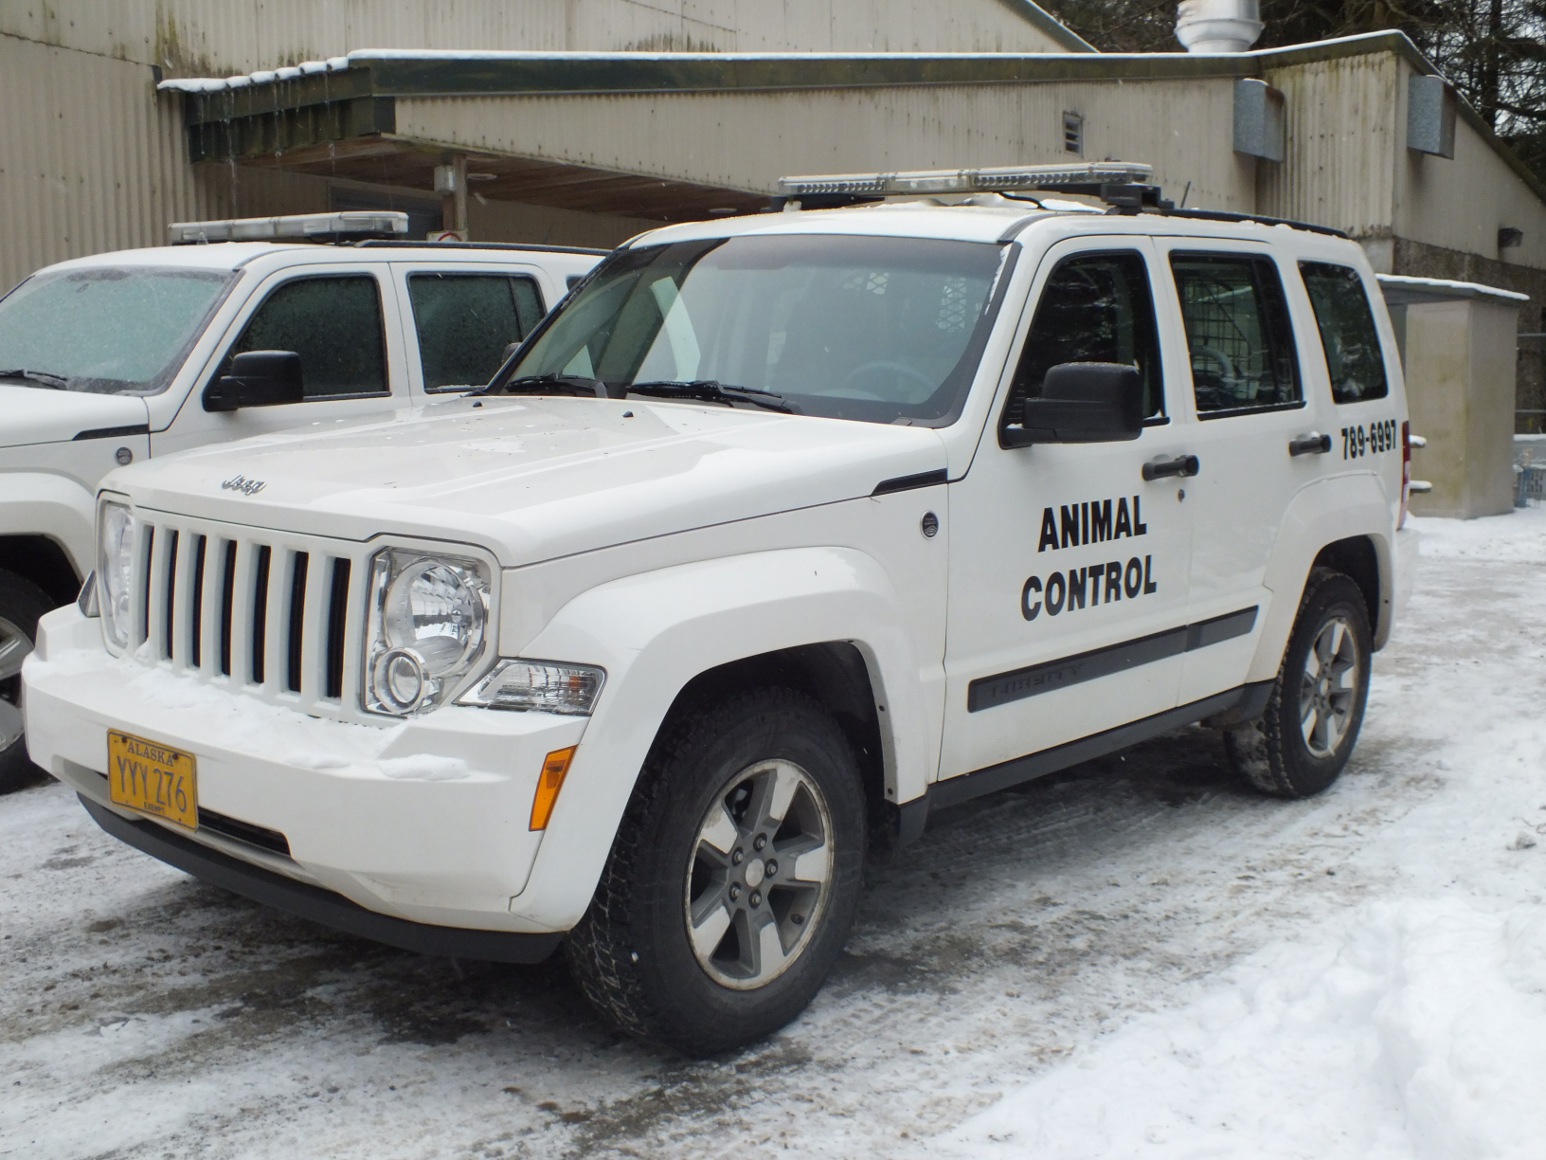 Juneau Animal Control vehicles